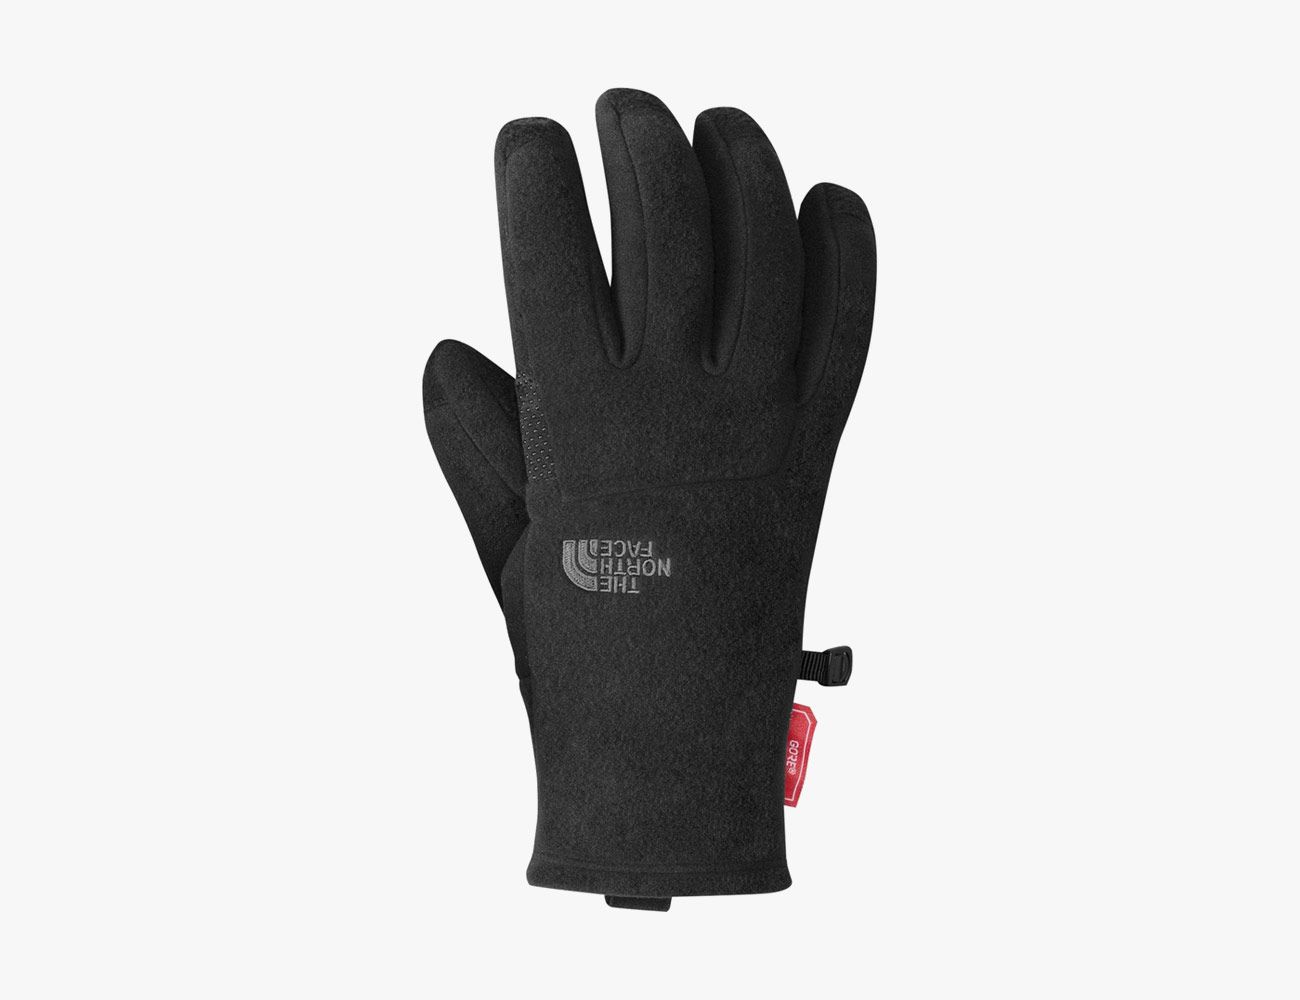 The Best Running Gloves of Winter 2018